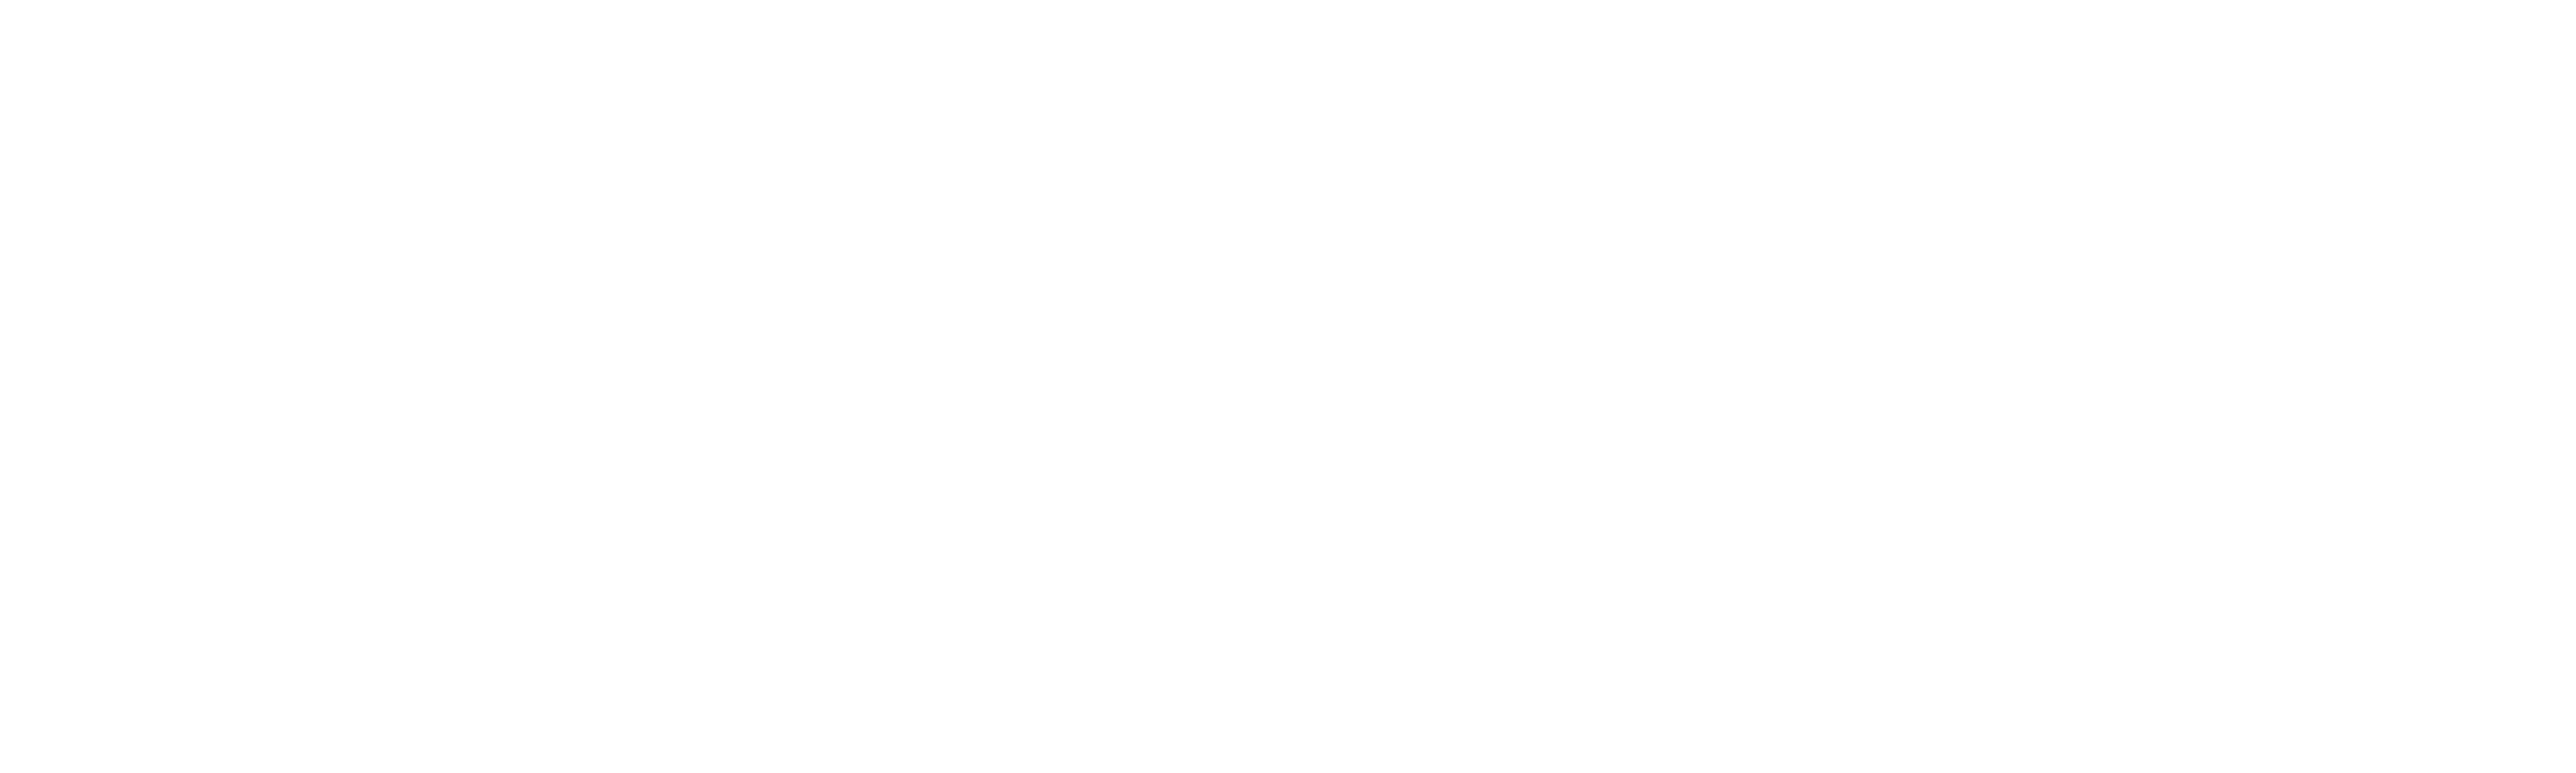 Zeta Wolf Fitness